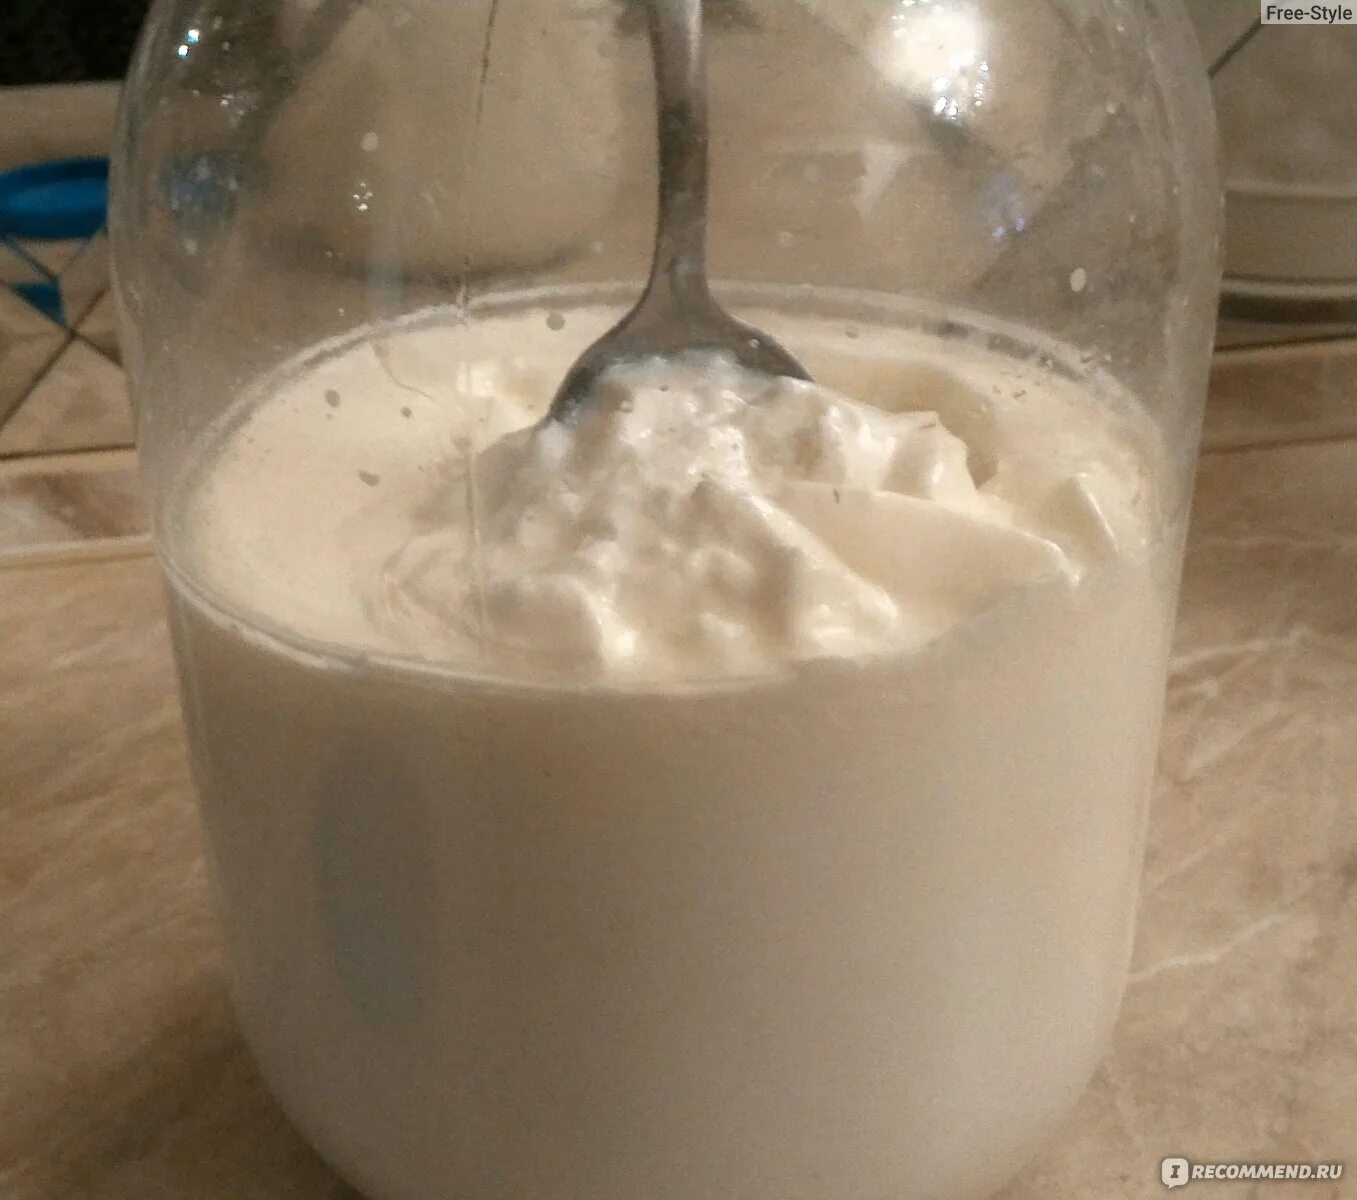 Молоко домашнее. Кислое молоко. Скисшее молоко. Домашний кефир из молока.